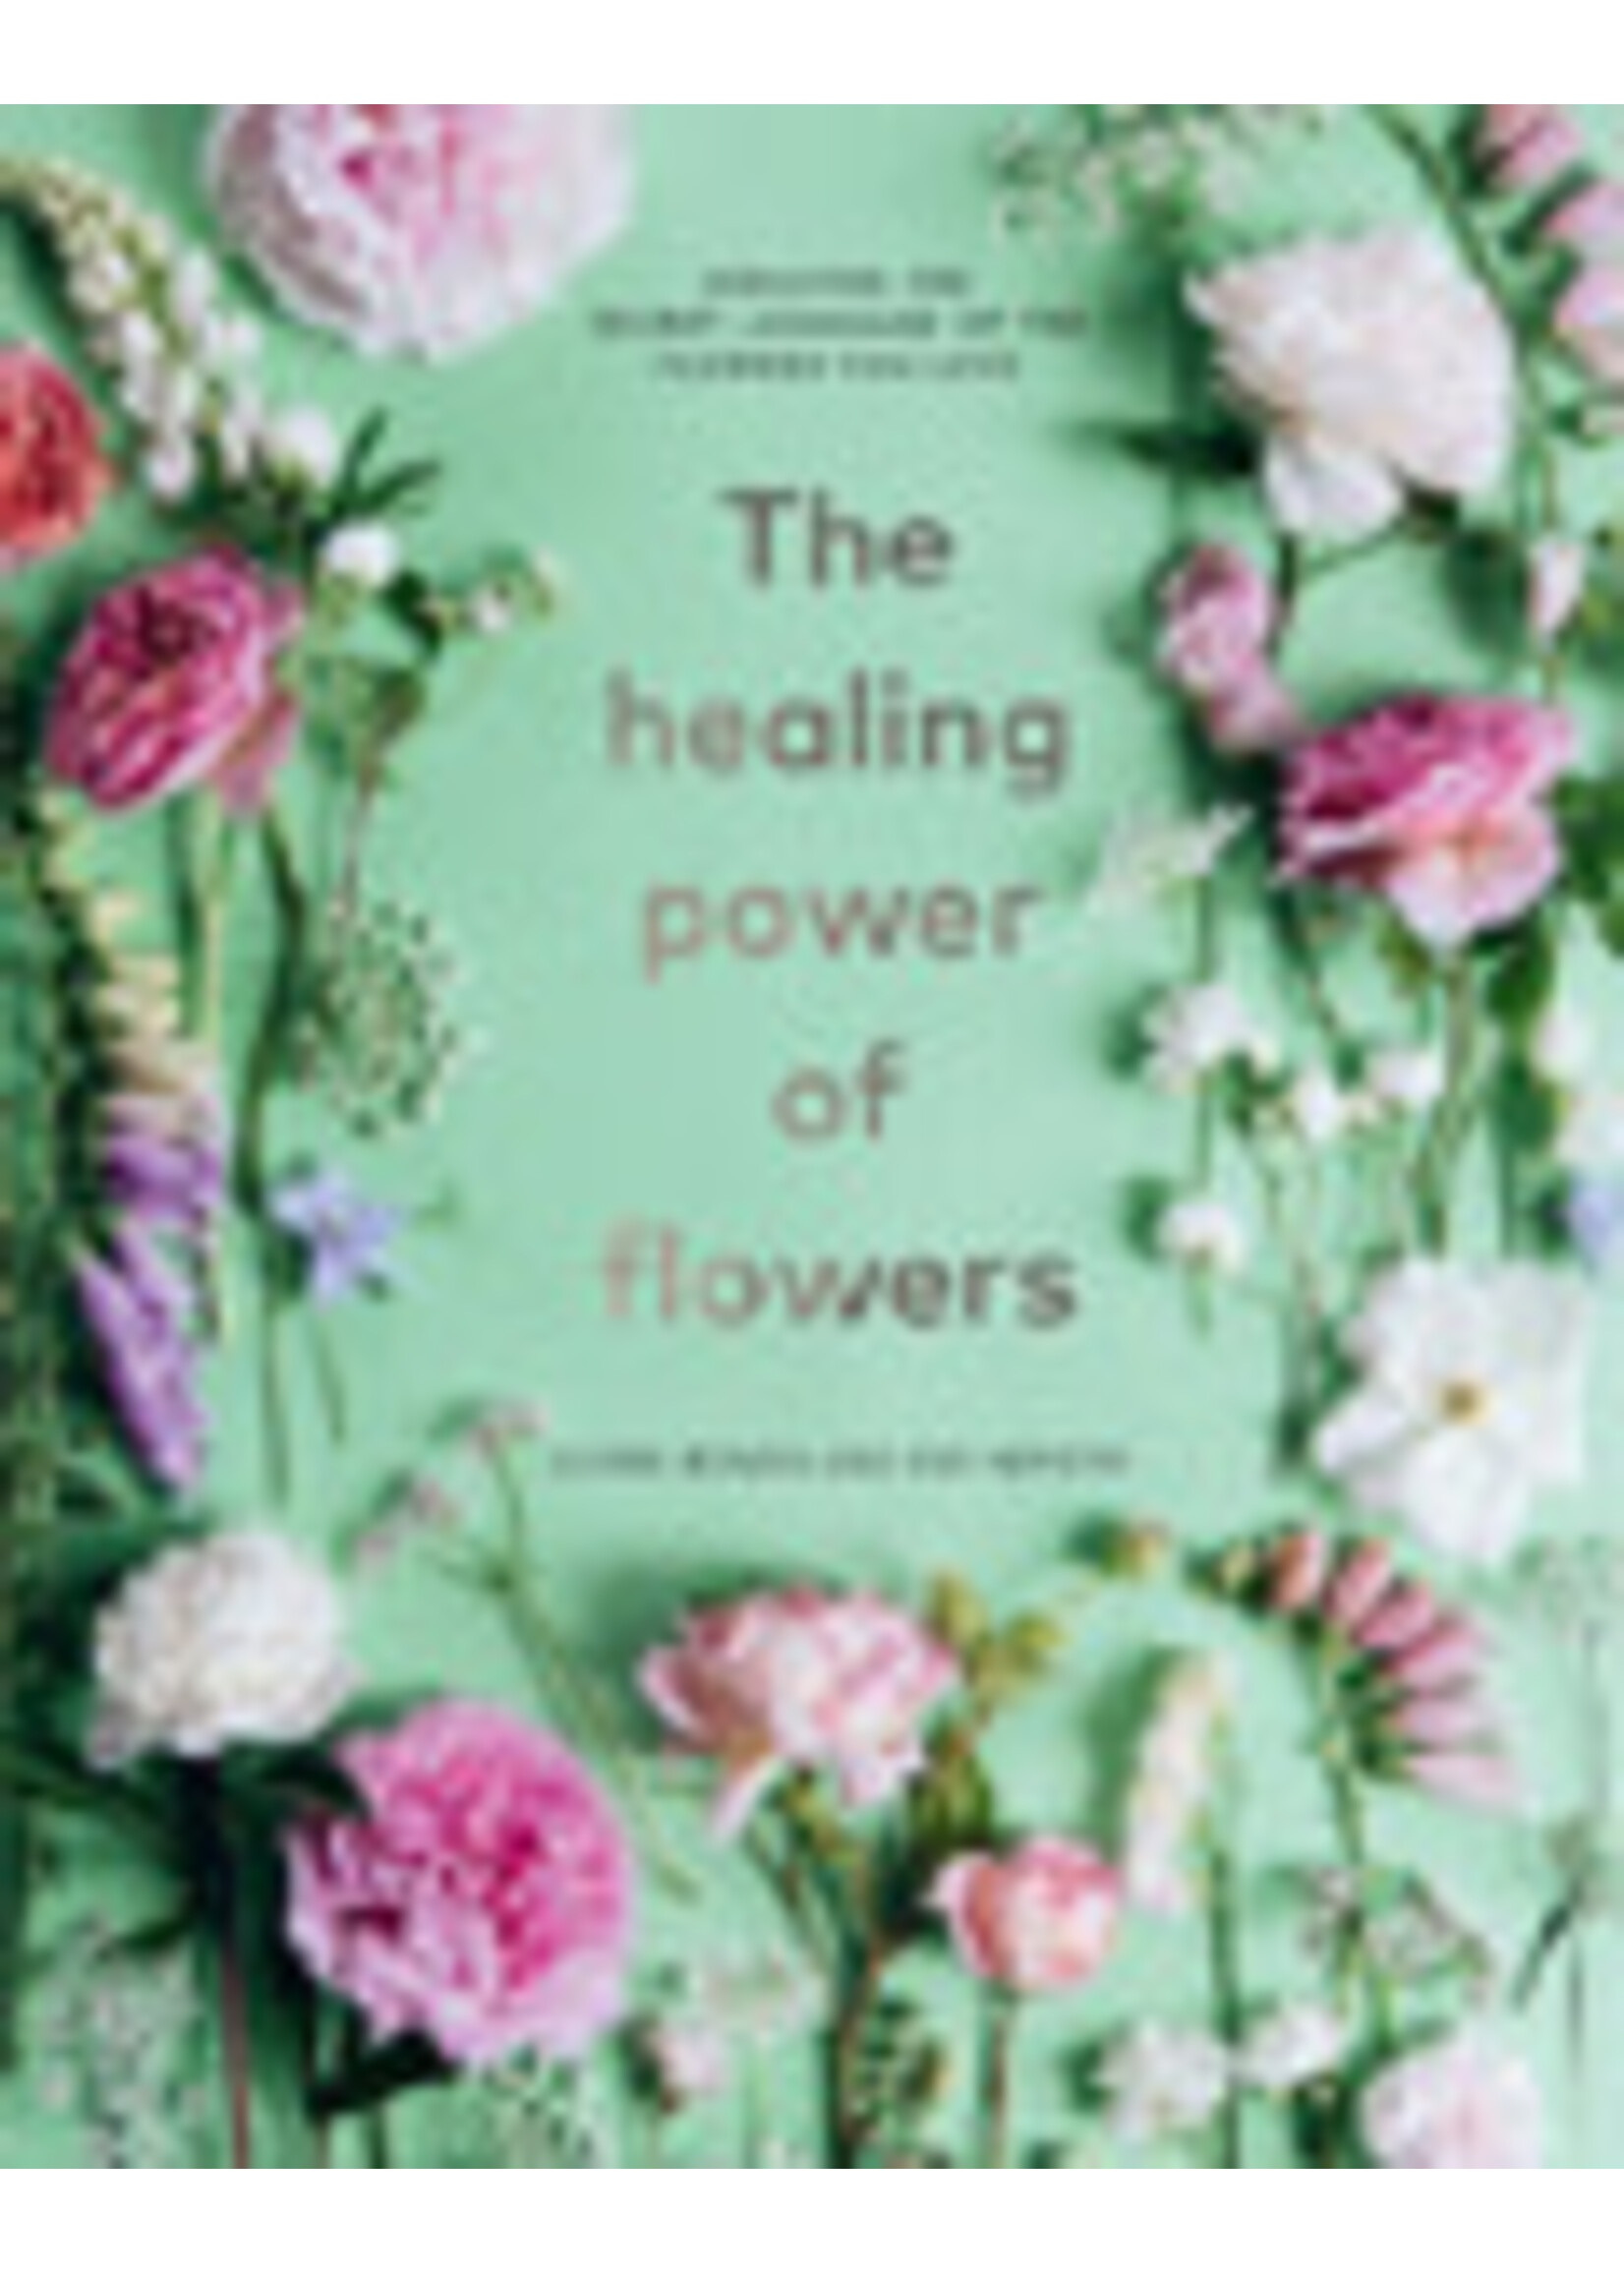 Healing Power of Flowers